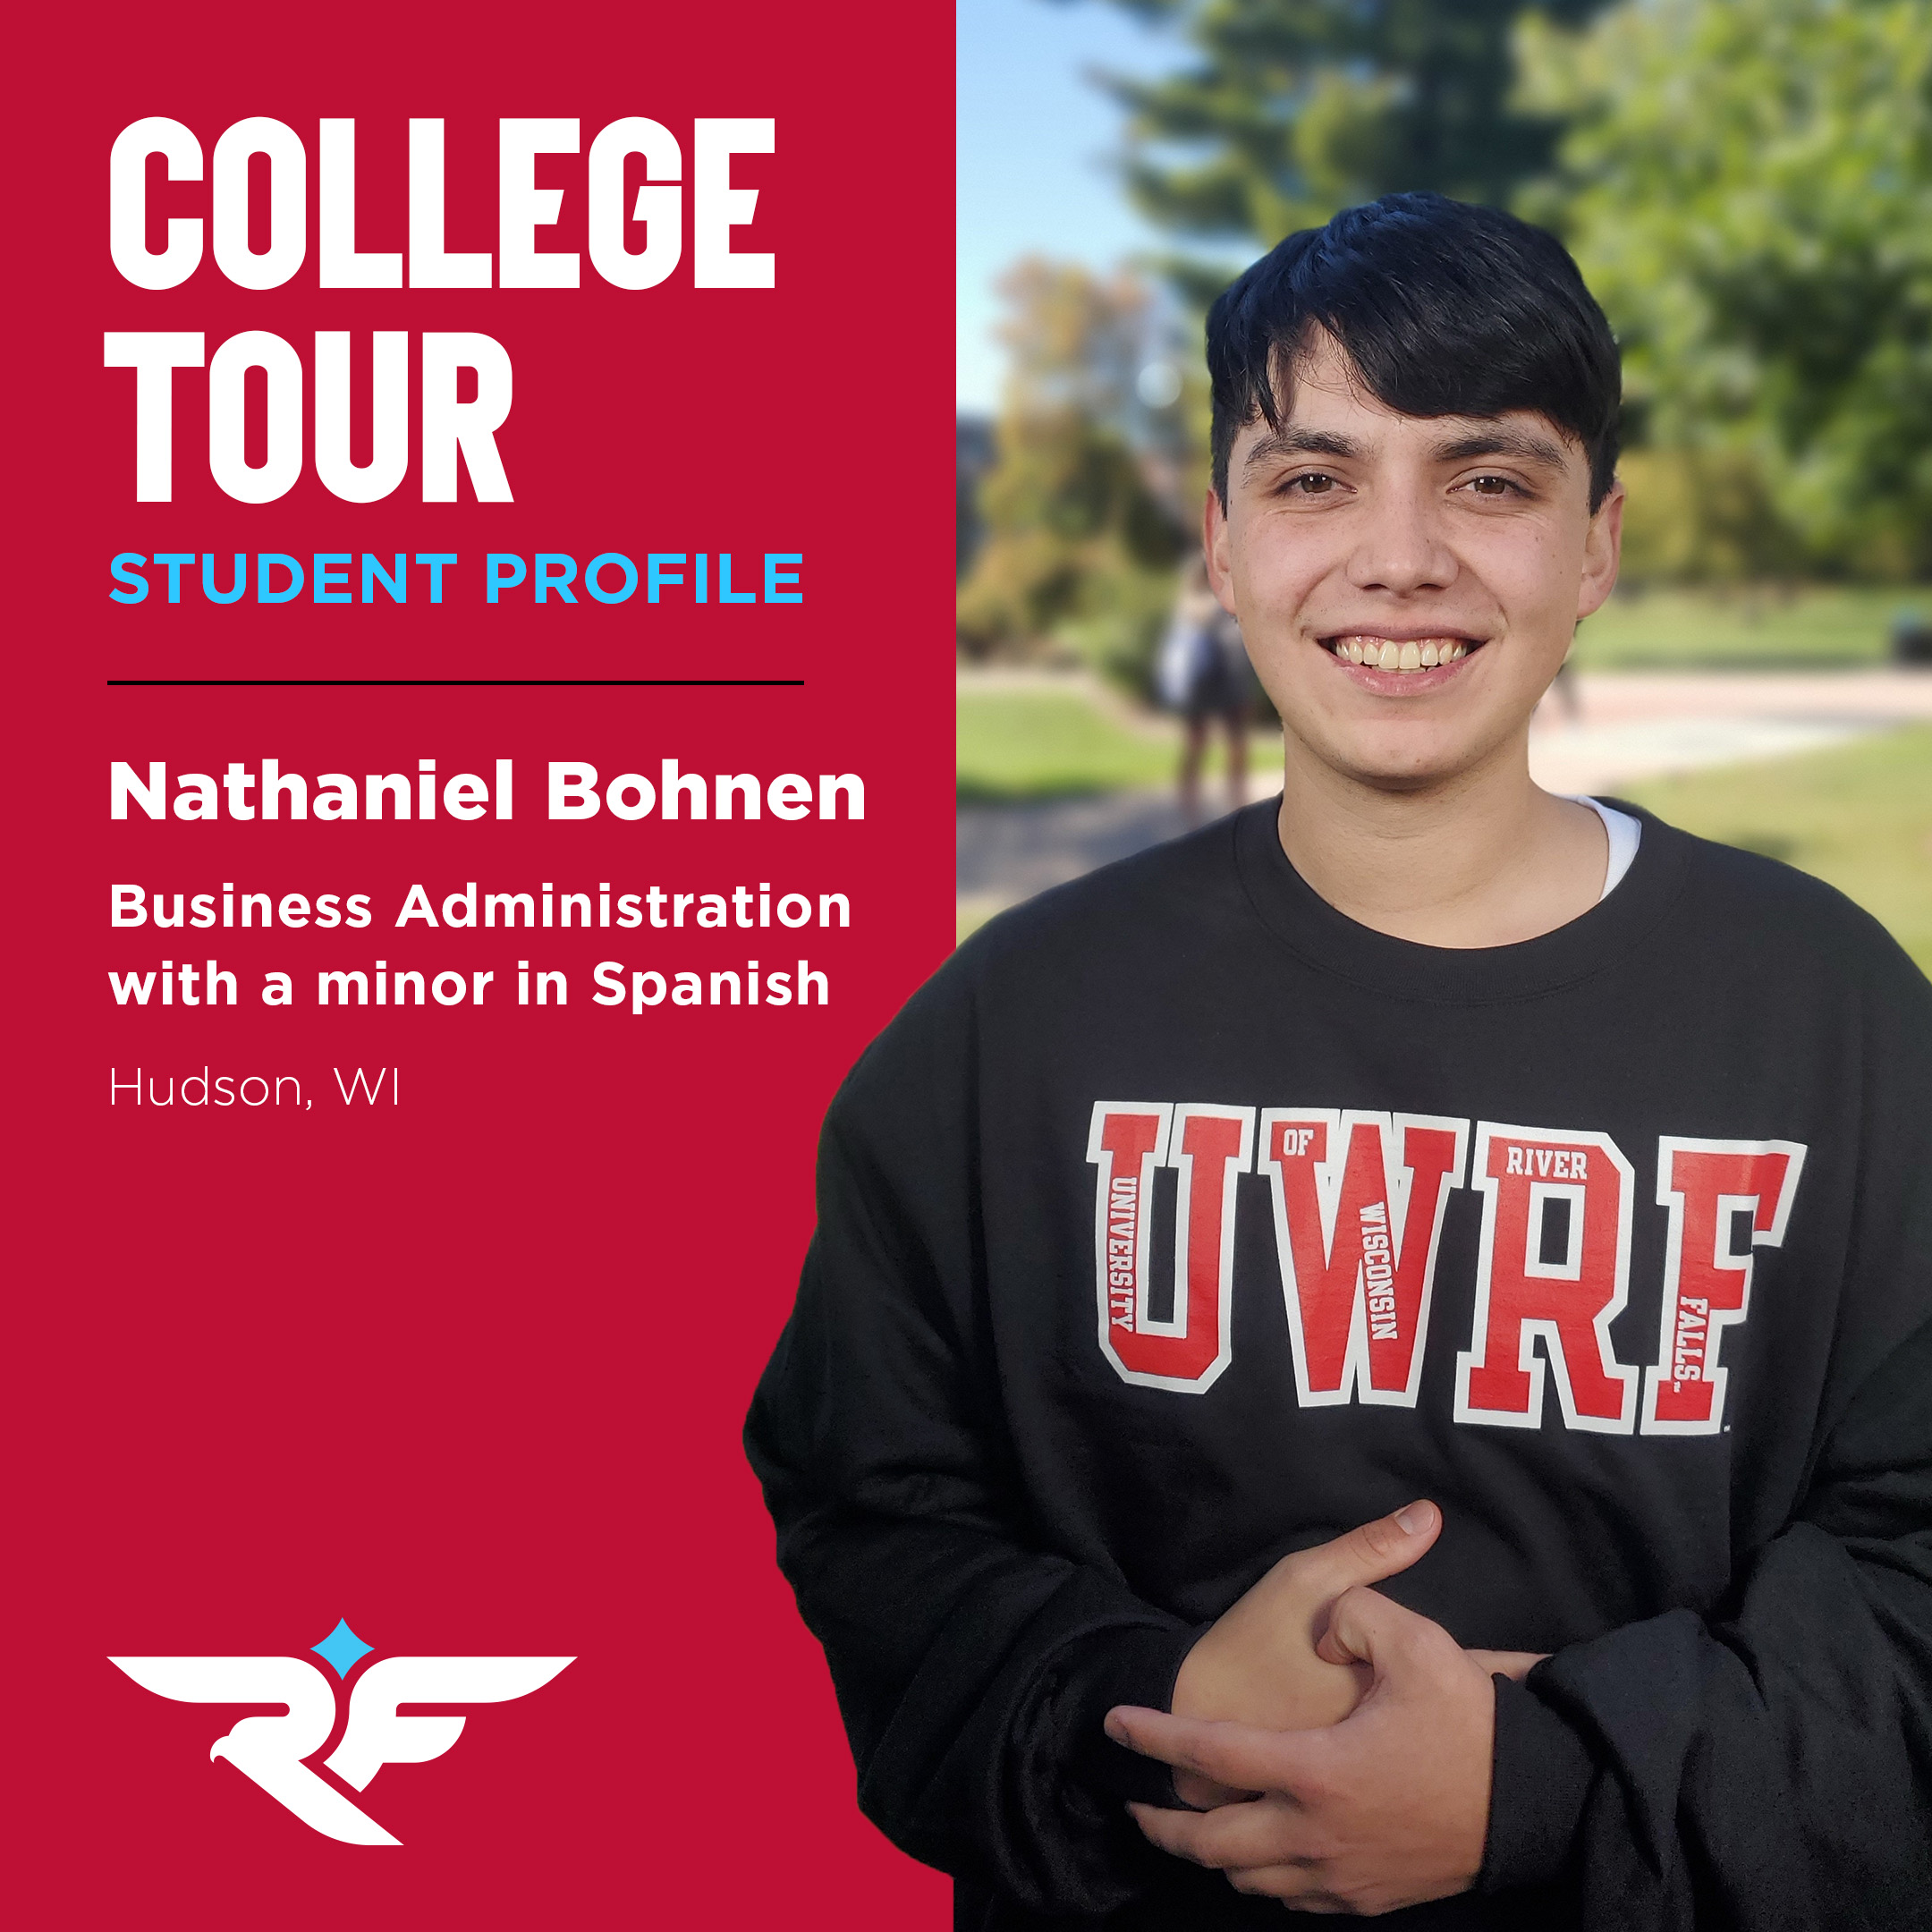 College Tour Nathaniel Bohnen